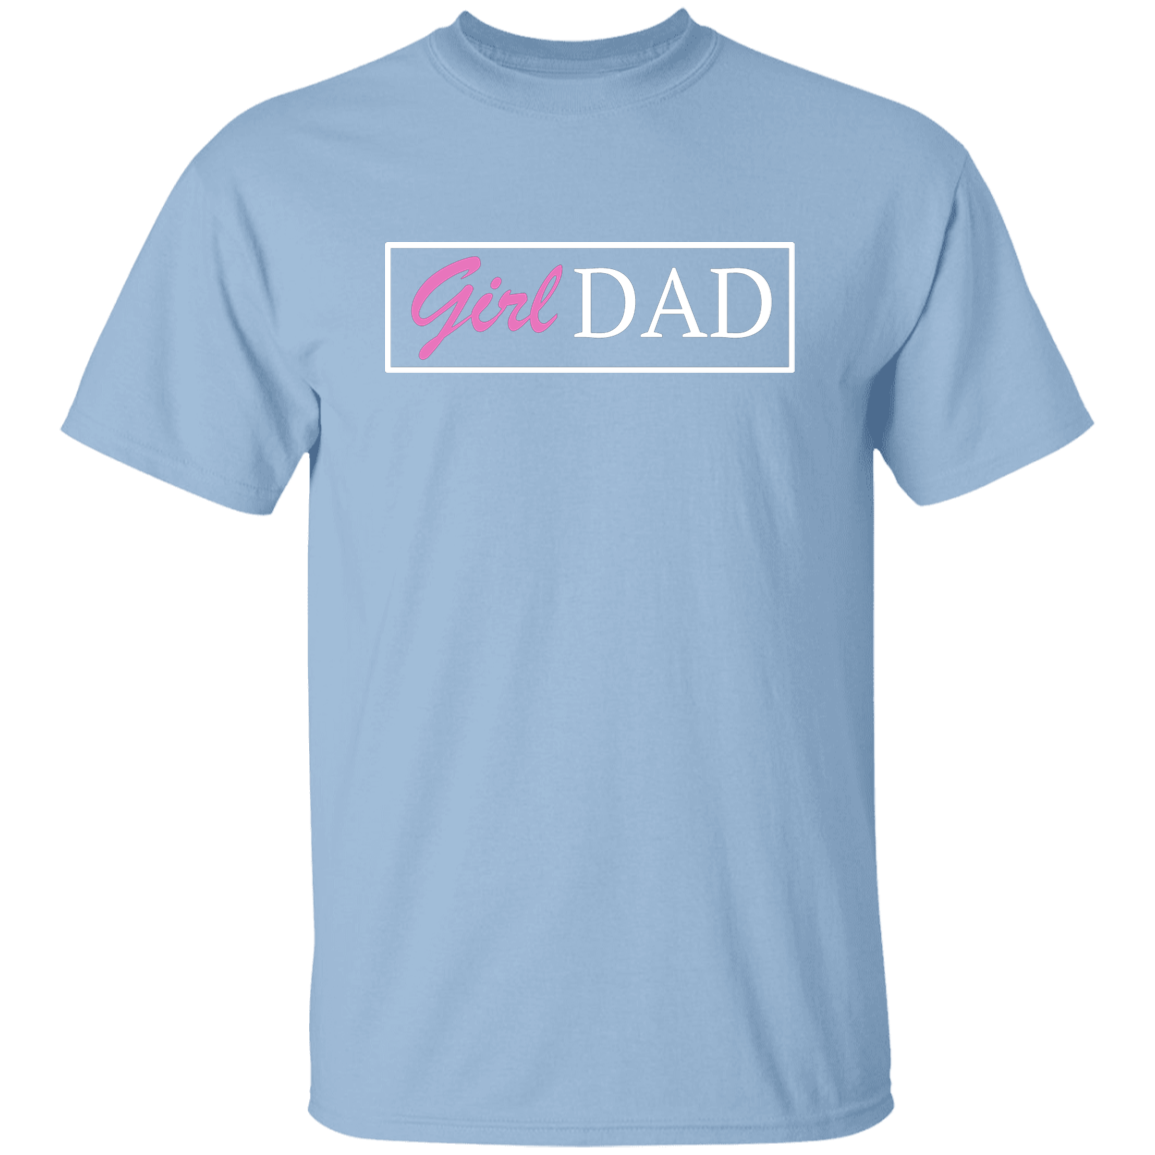 Mens - "Girl Dad" Matching Shirt